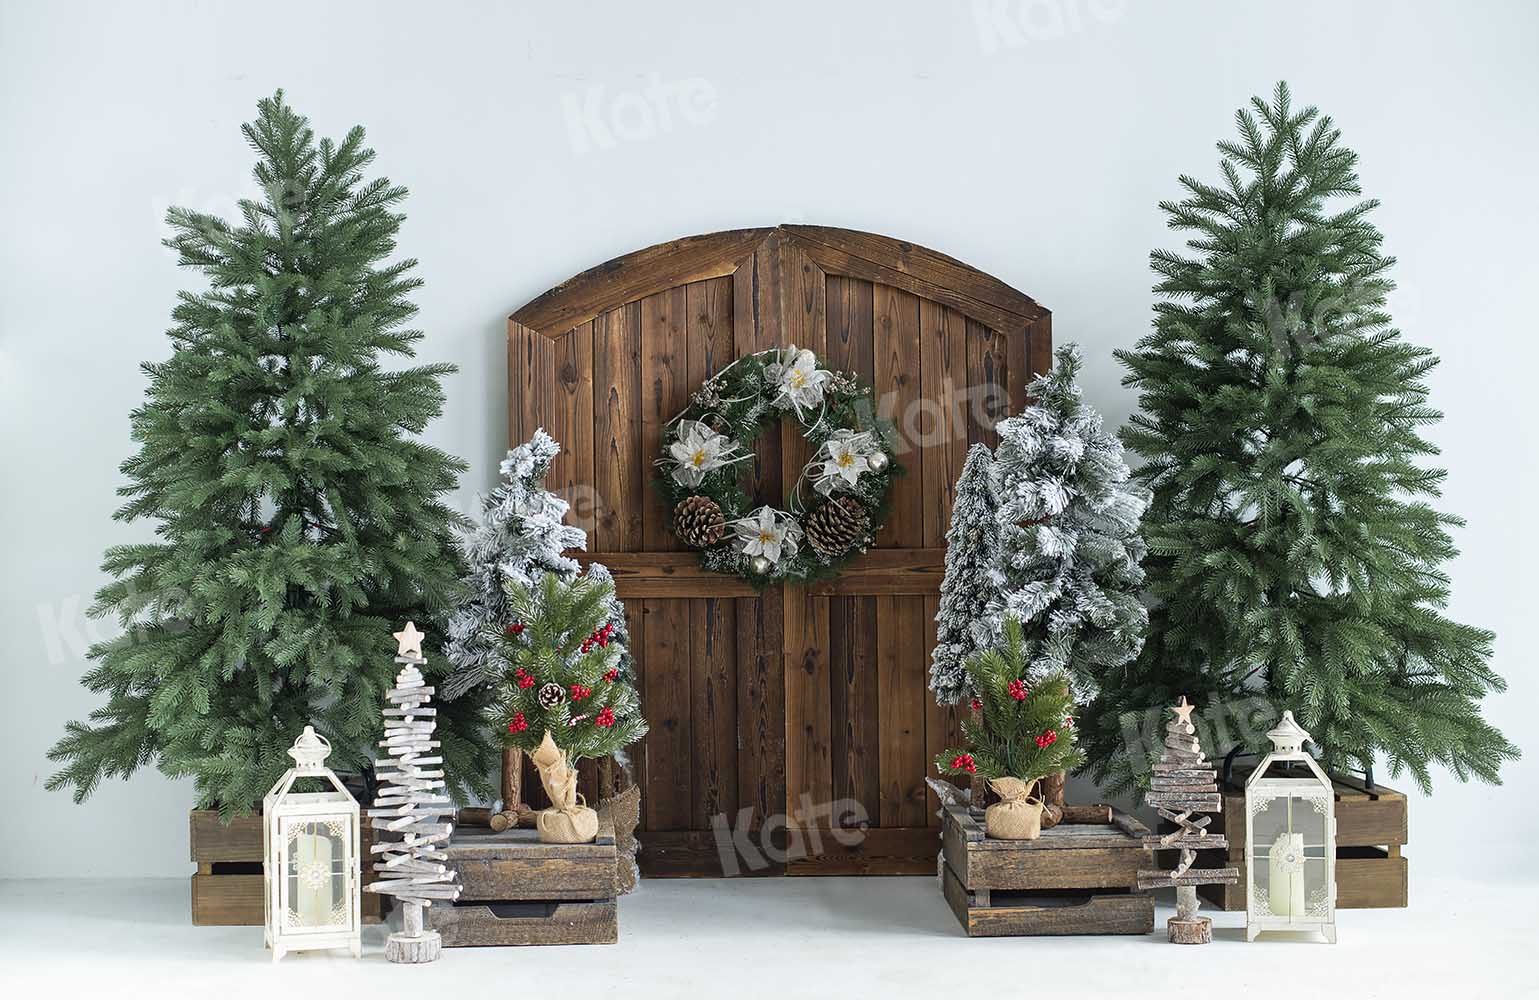 Kate Christmas Tree Barn Door Backdrop Designed by Emetselch